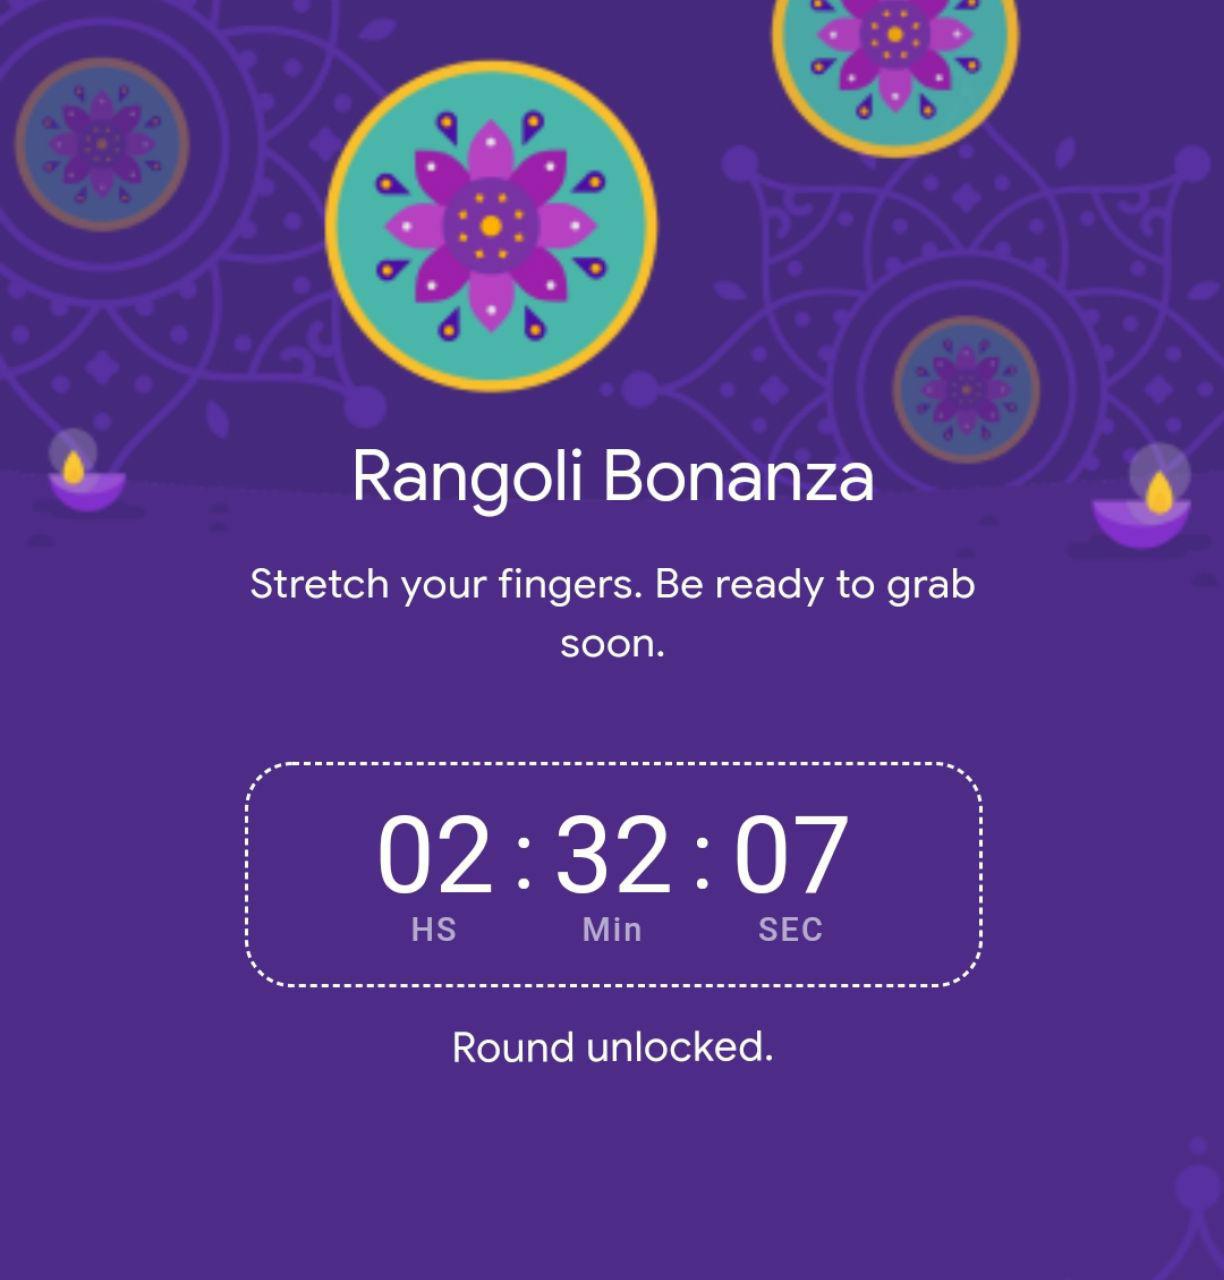 Google Rangoli Bonanza - Get 100% Free Rangoli